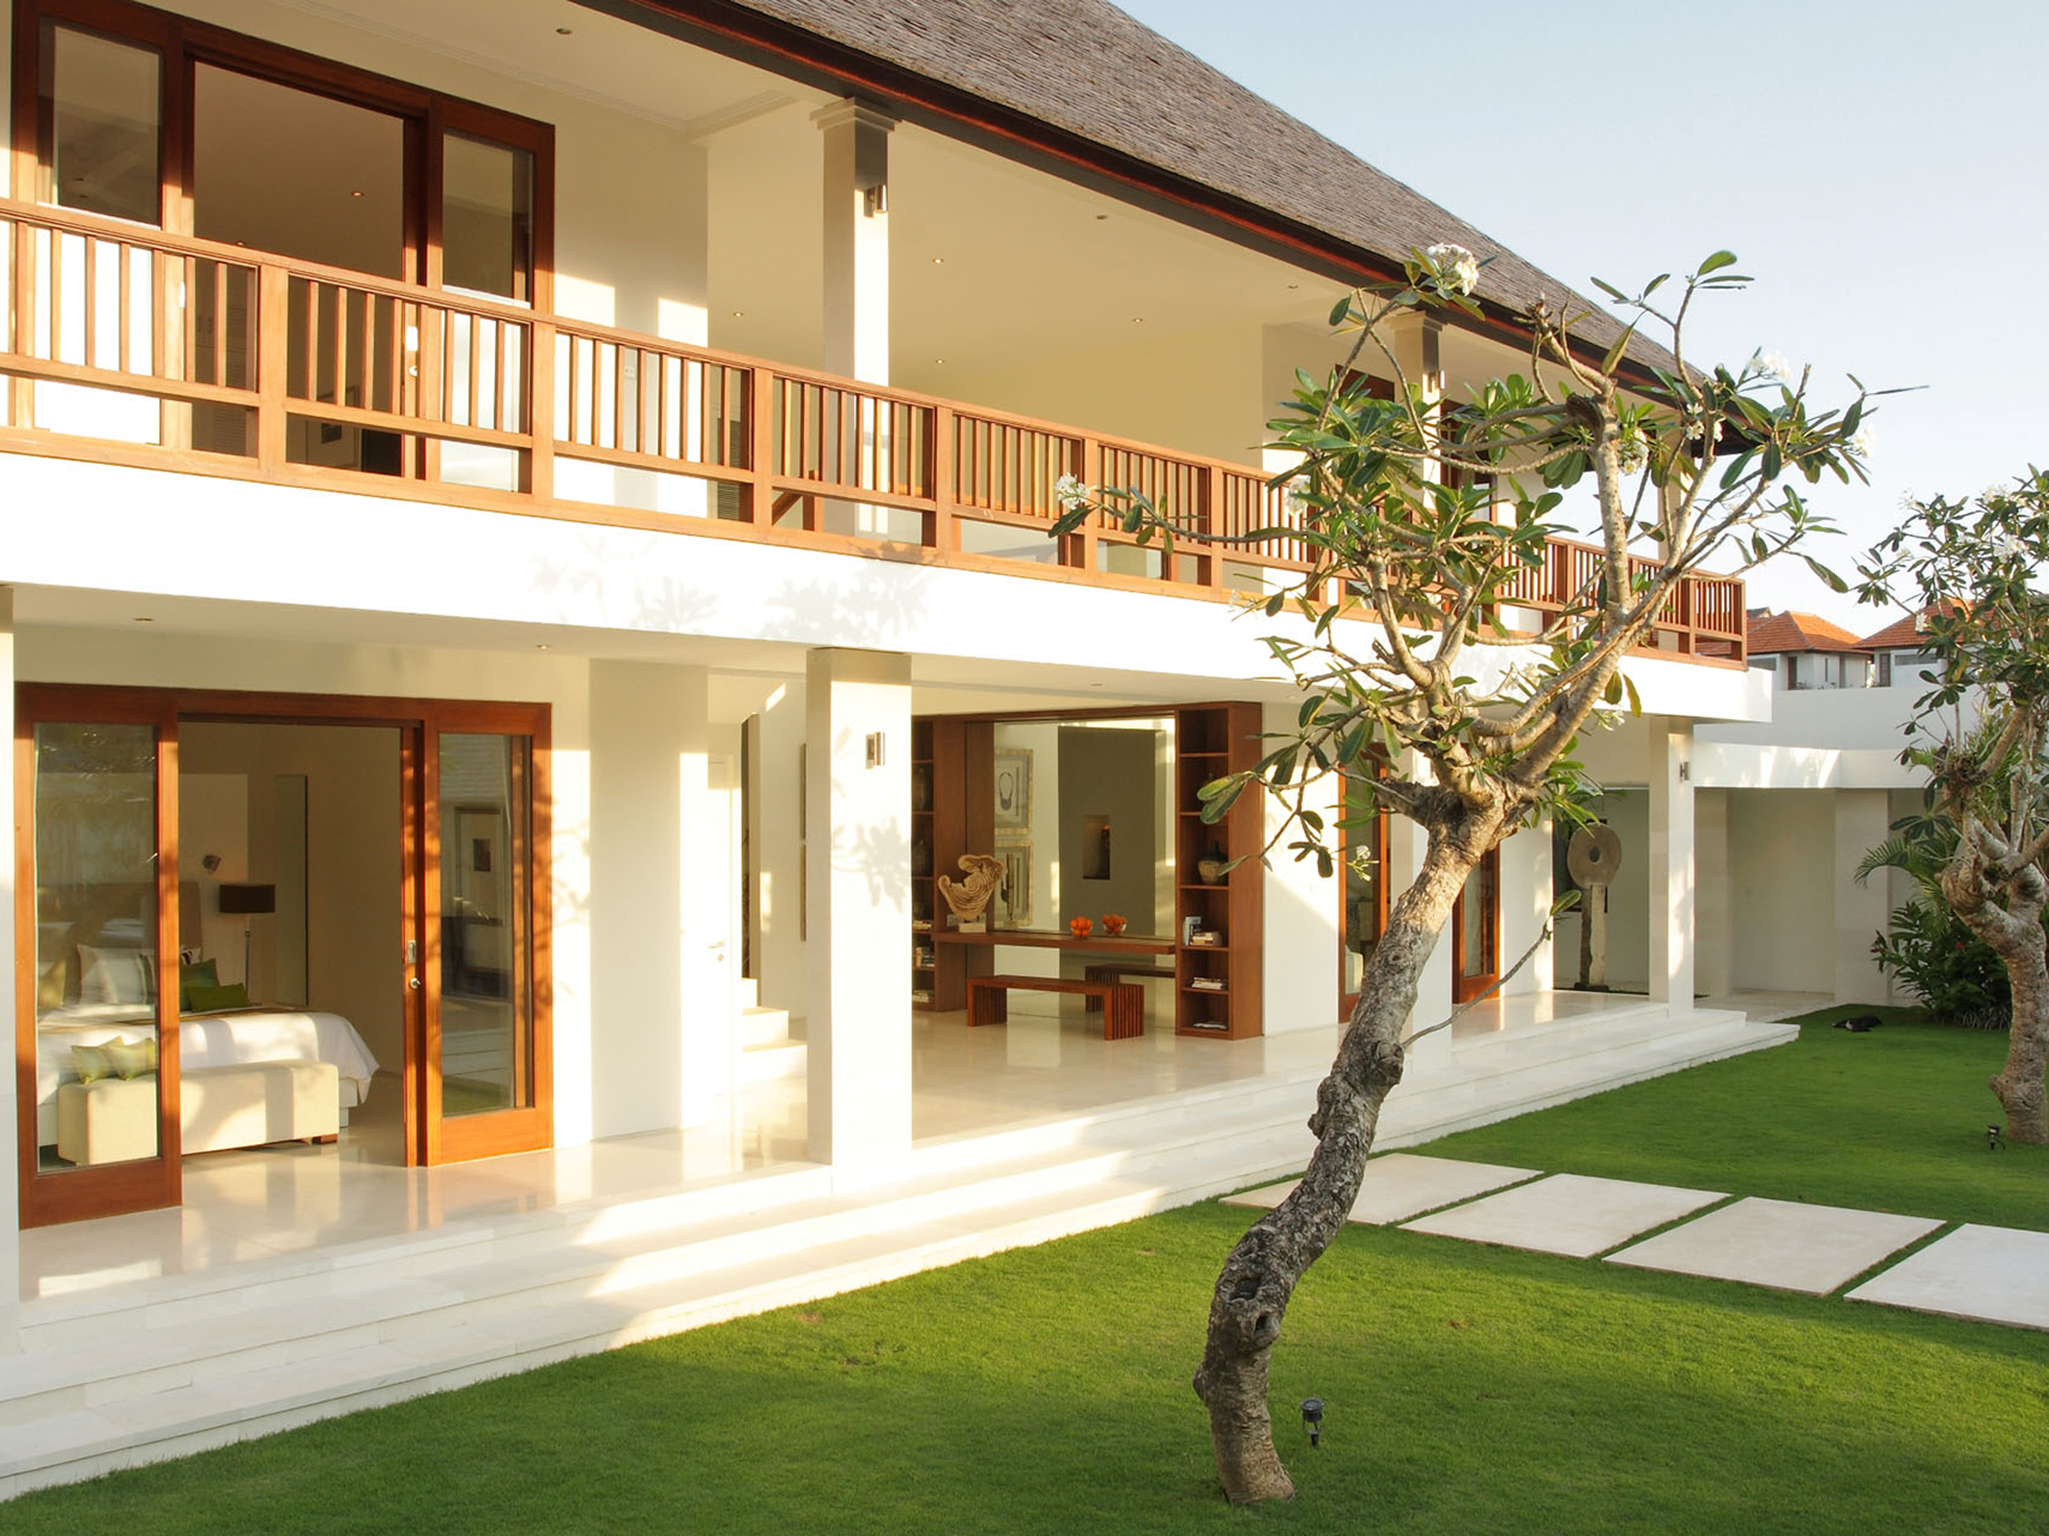 Villa Asante - Bedroom pavilion - Villa Asante, Canggu, Bali